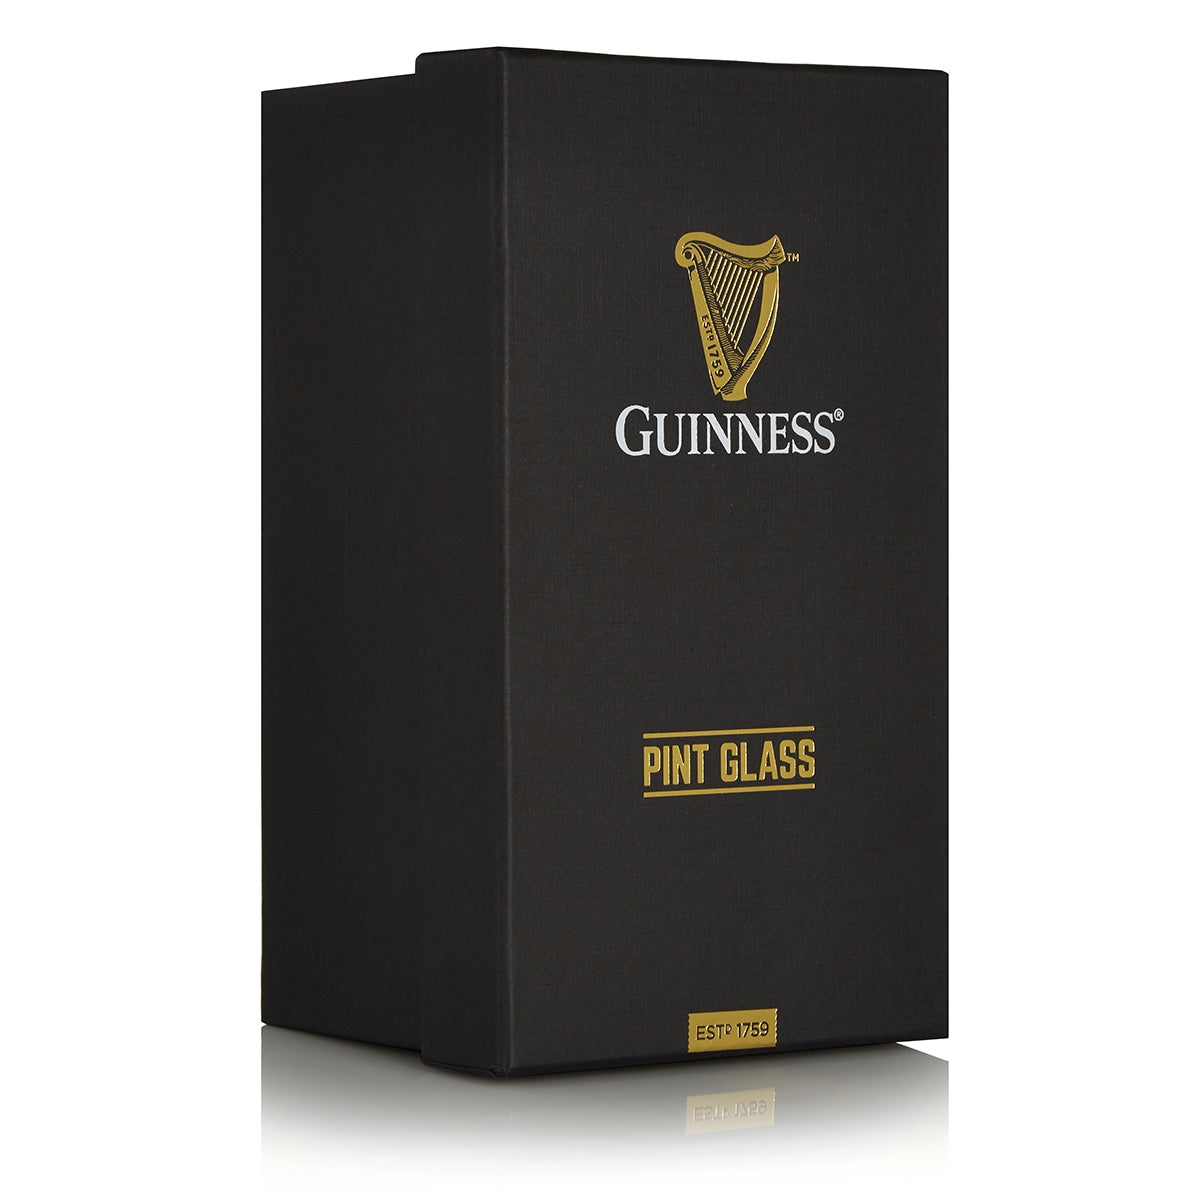 Guinness embossed stem glass in a black box.